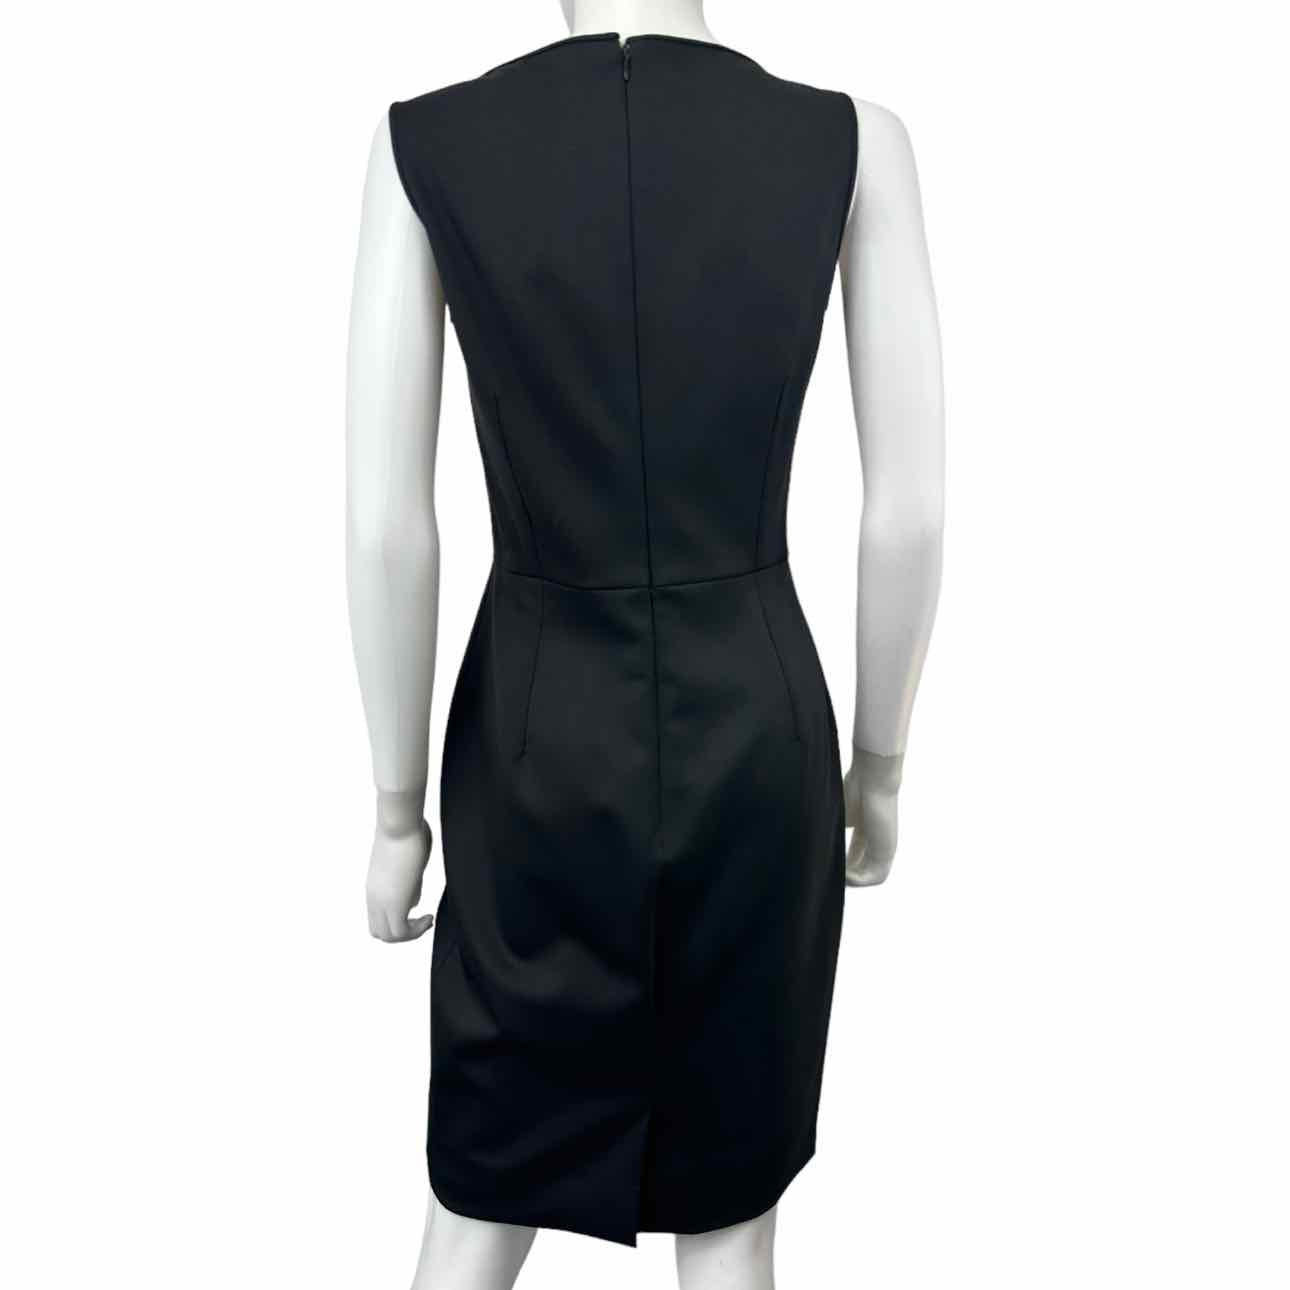 VALENTINO TECHNOCOUTURE Black 2 Piece Dress and Jacket, black designer dress